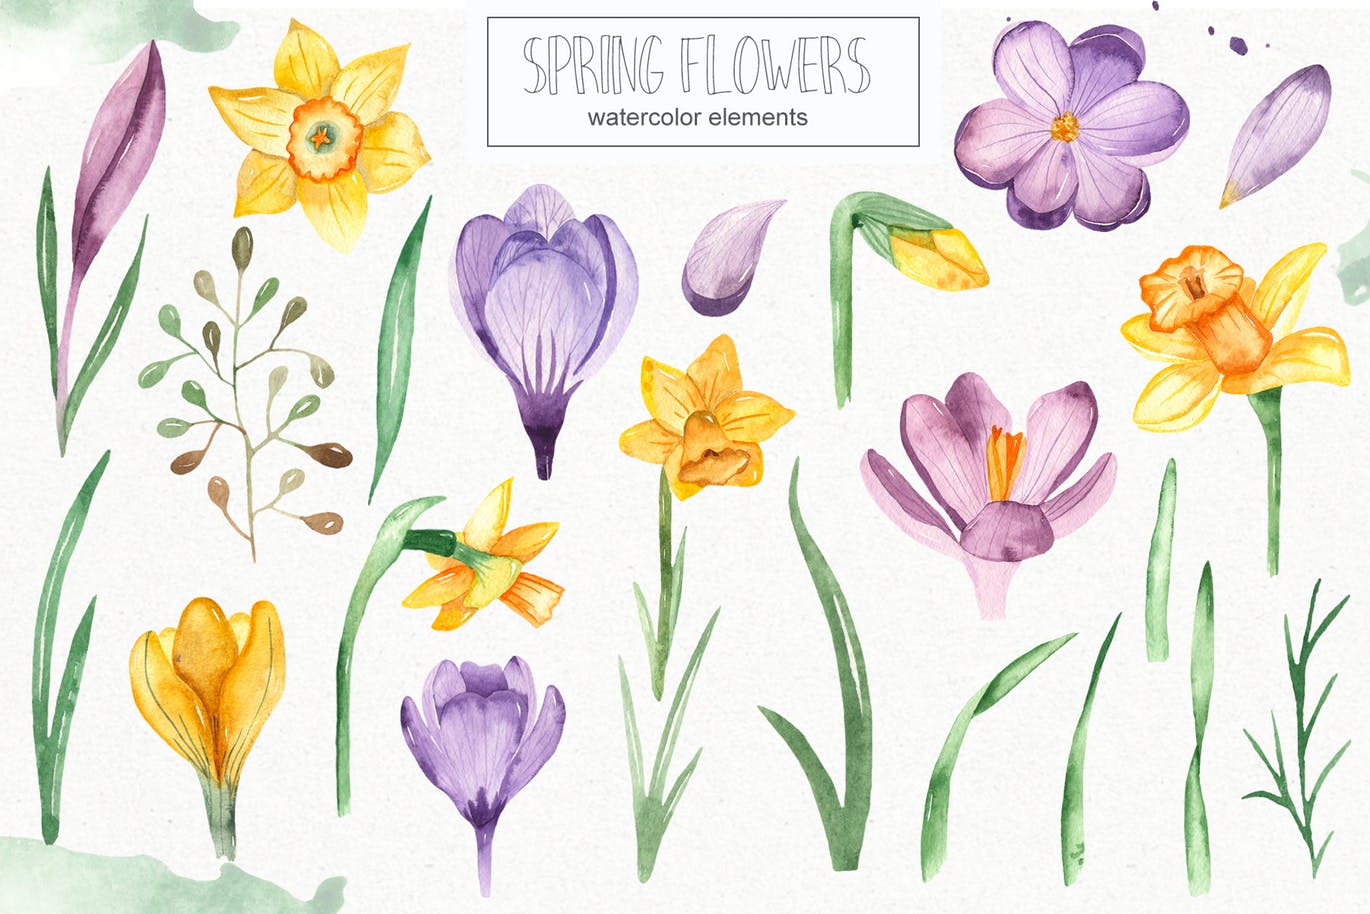 春季花卉水彩素材套装 Watercolor spring flowers collection插图(2)